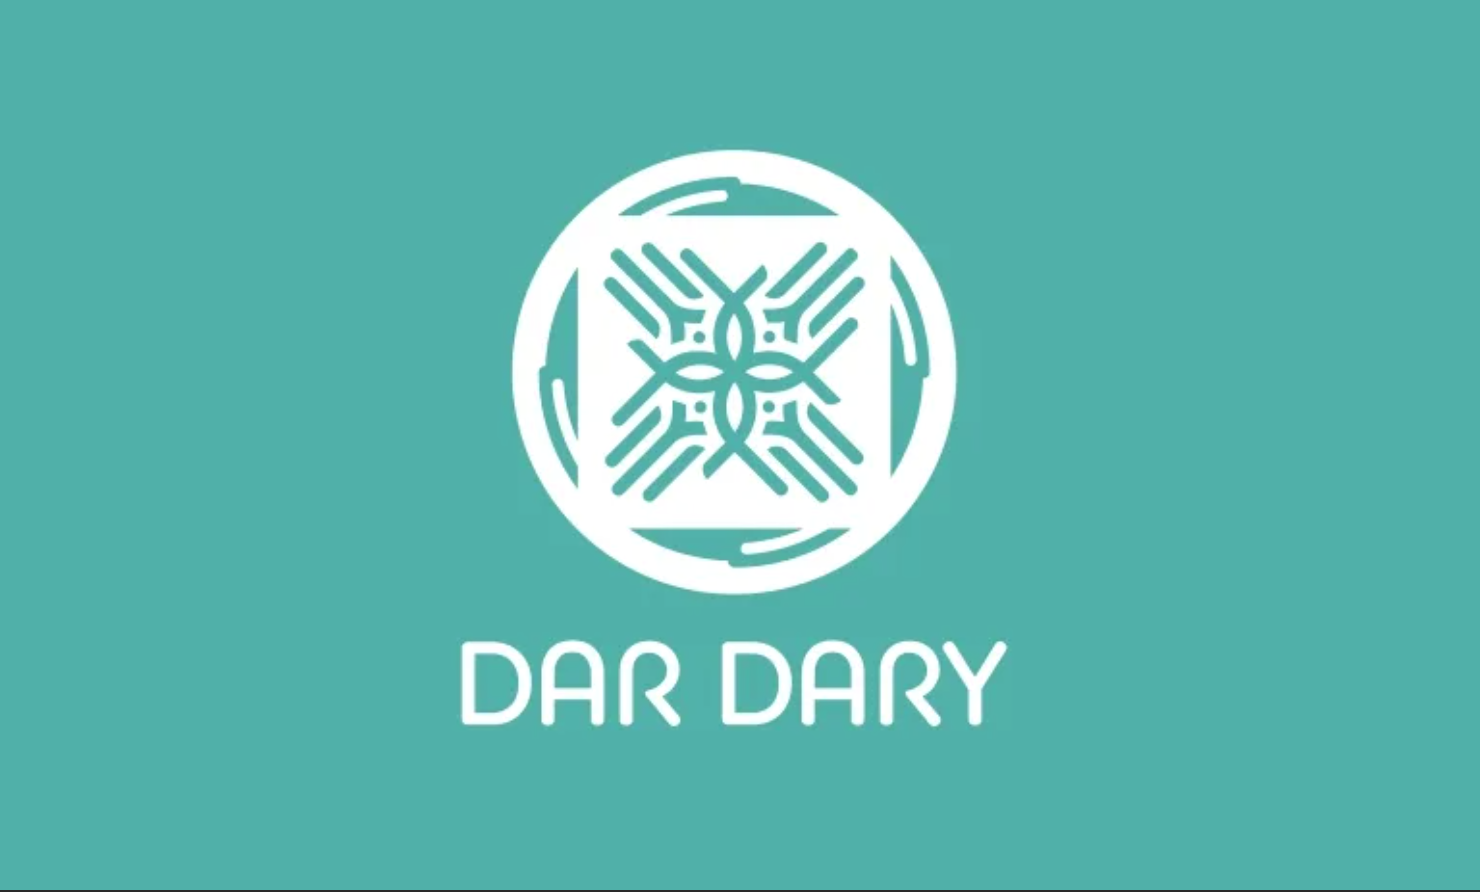 Массажная франшиза. Dar Dary логотип. Дардари массажный салон.